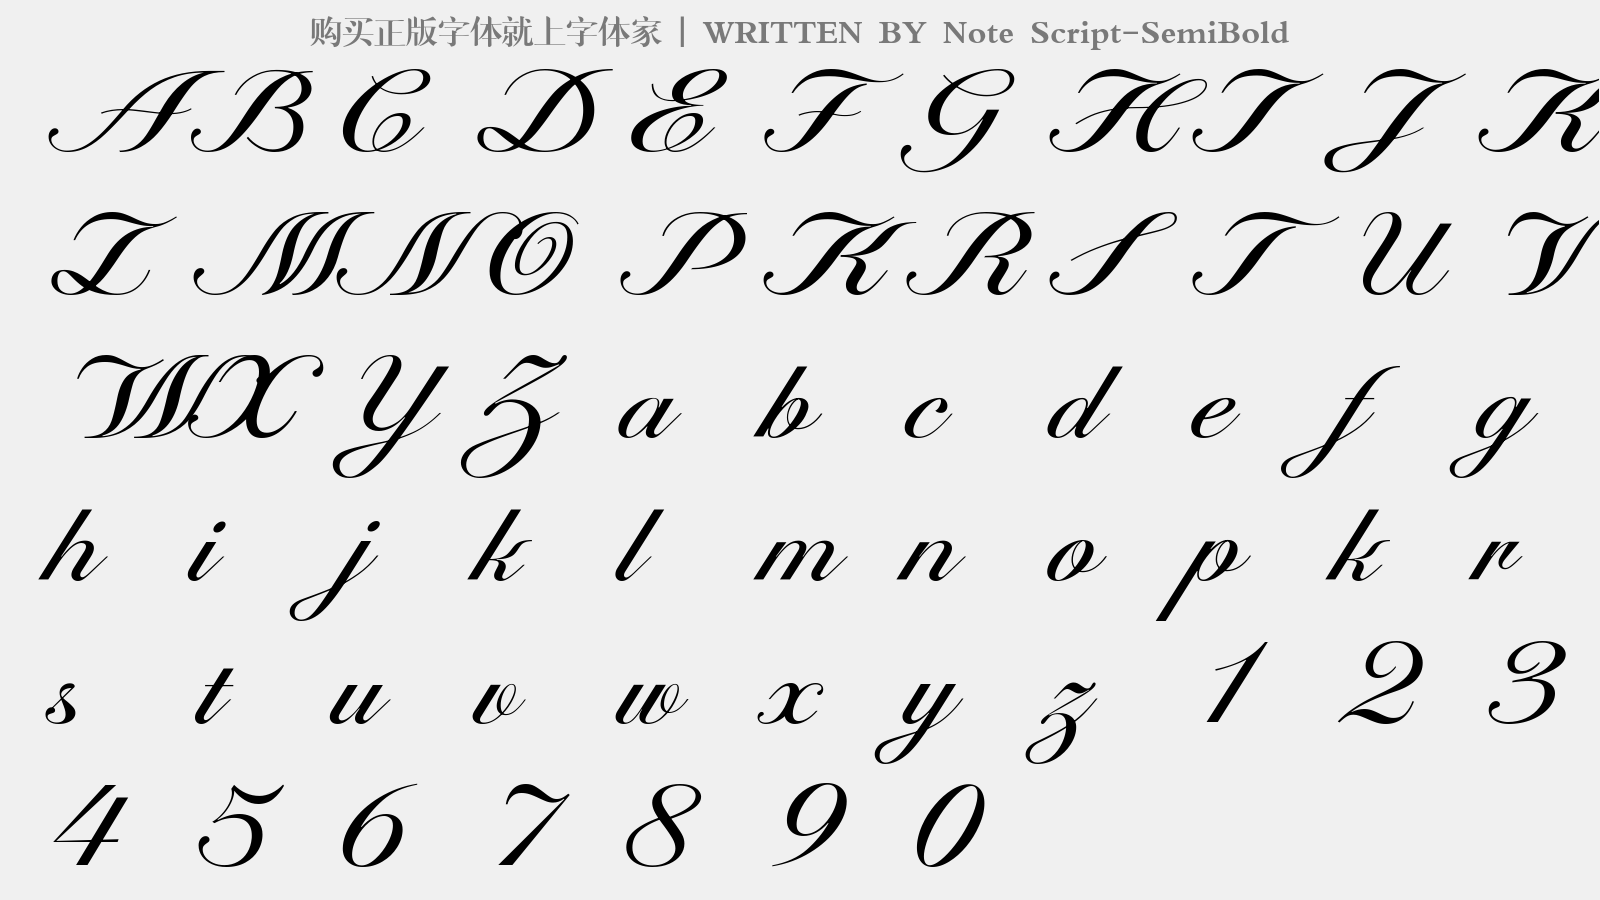 Note Script-SemiBold - 大写字母/小写字母/数字